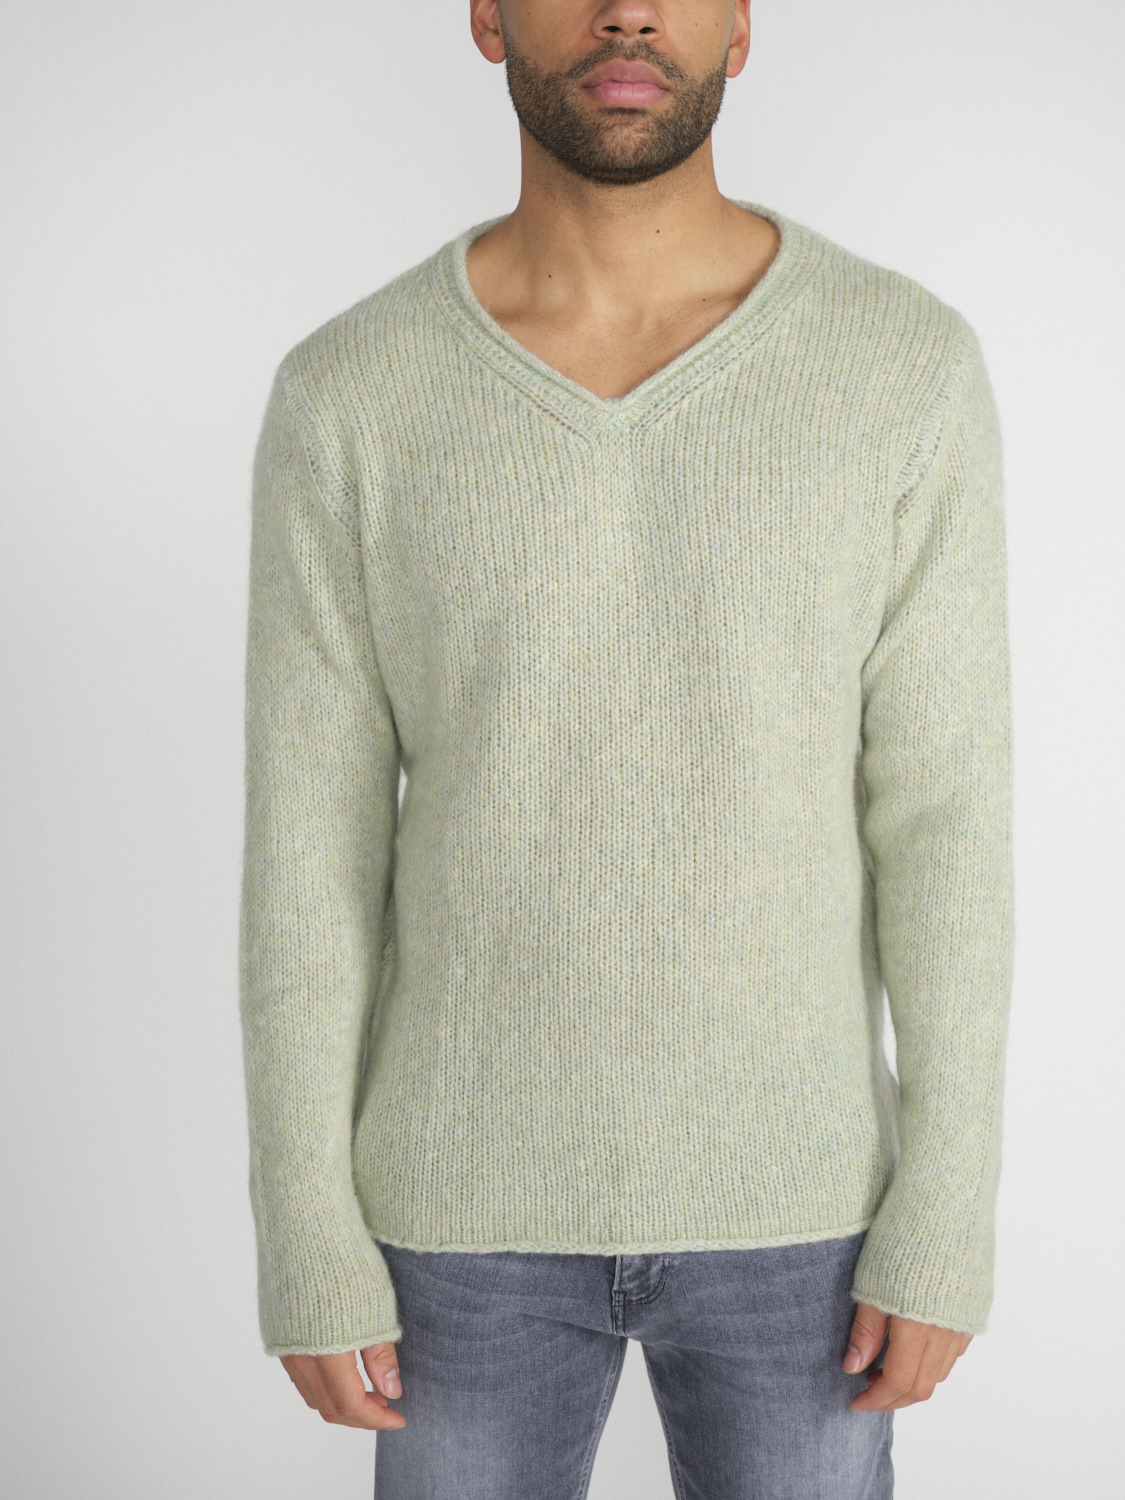 Stephan Boya Boya Race - Lightweight knitted sweater in cashmere   hellgrün S